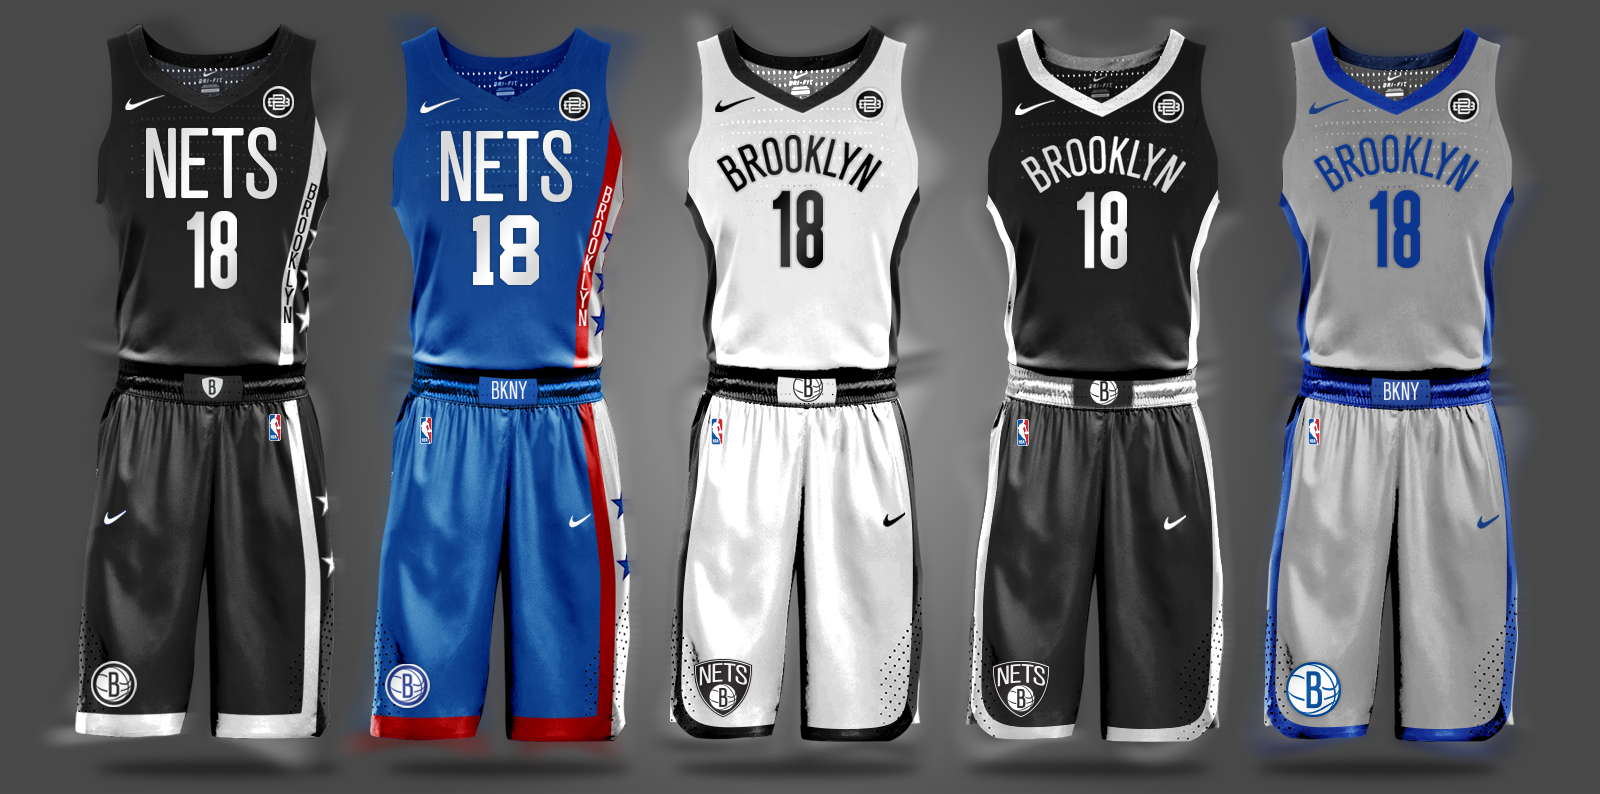 brooklyn nets new uniforms